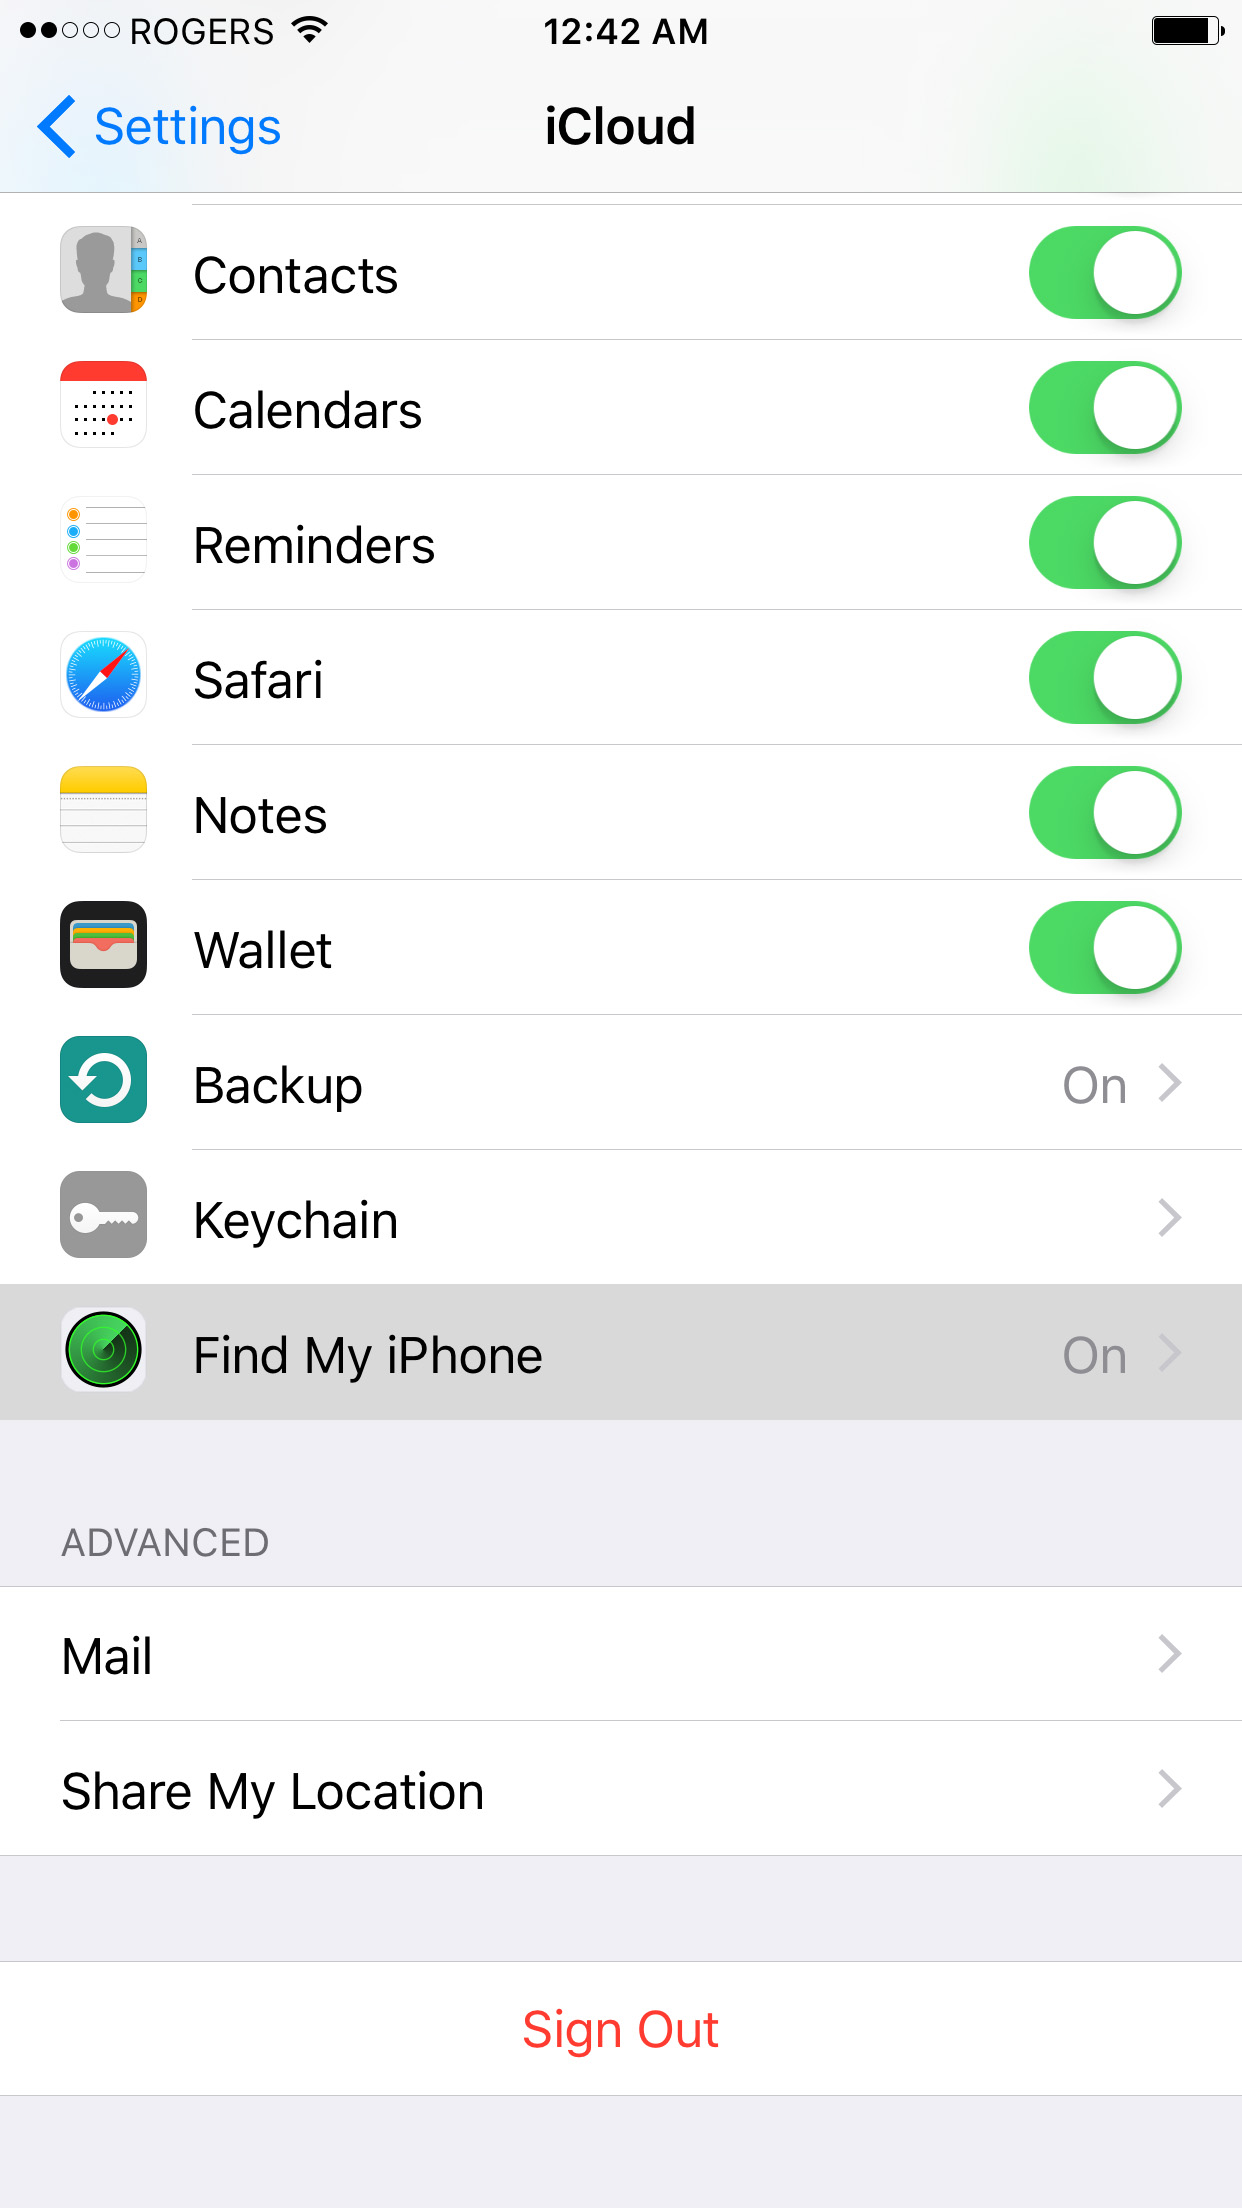 How to Jailbreak Your iPhone on iOS 9 (Windows) [9.0.2]